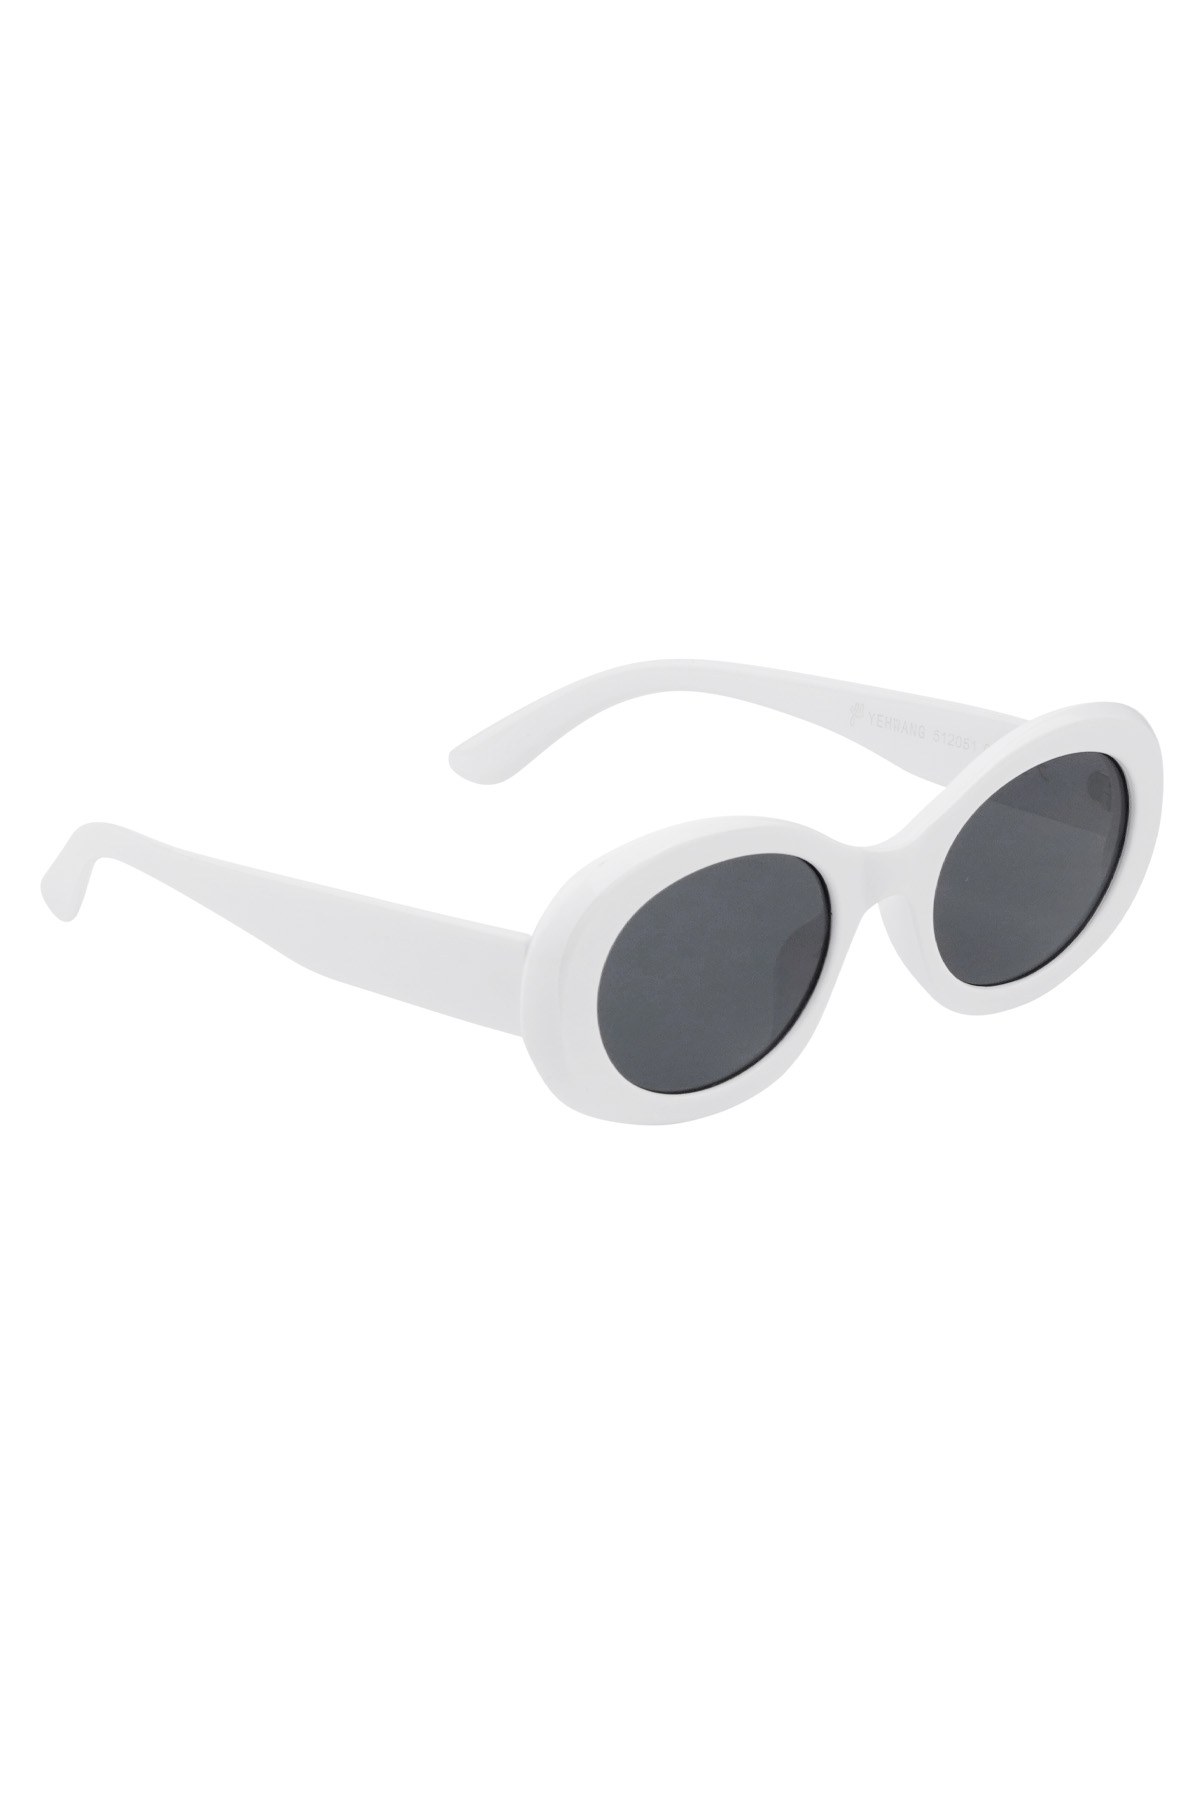 Sunglasses classy look a like - white